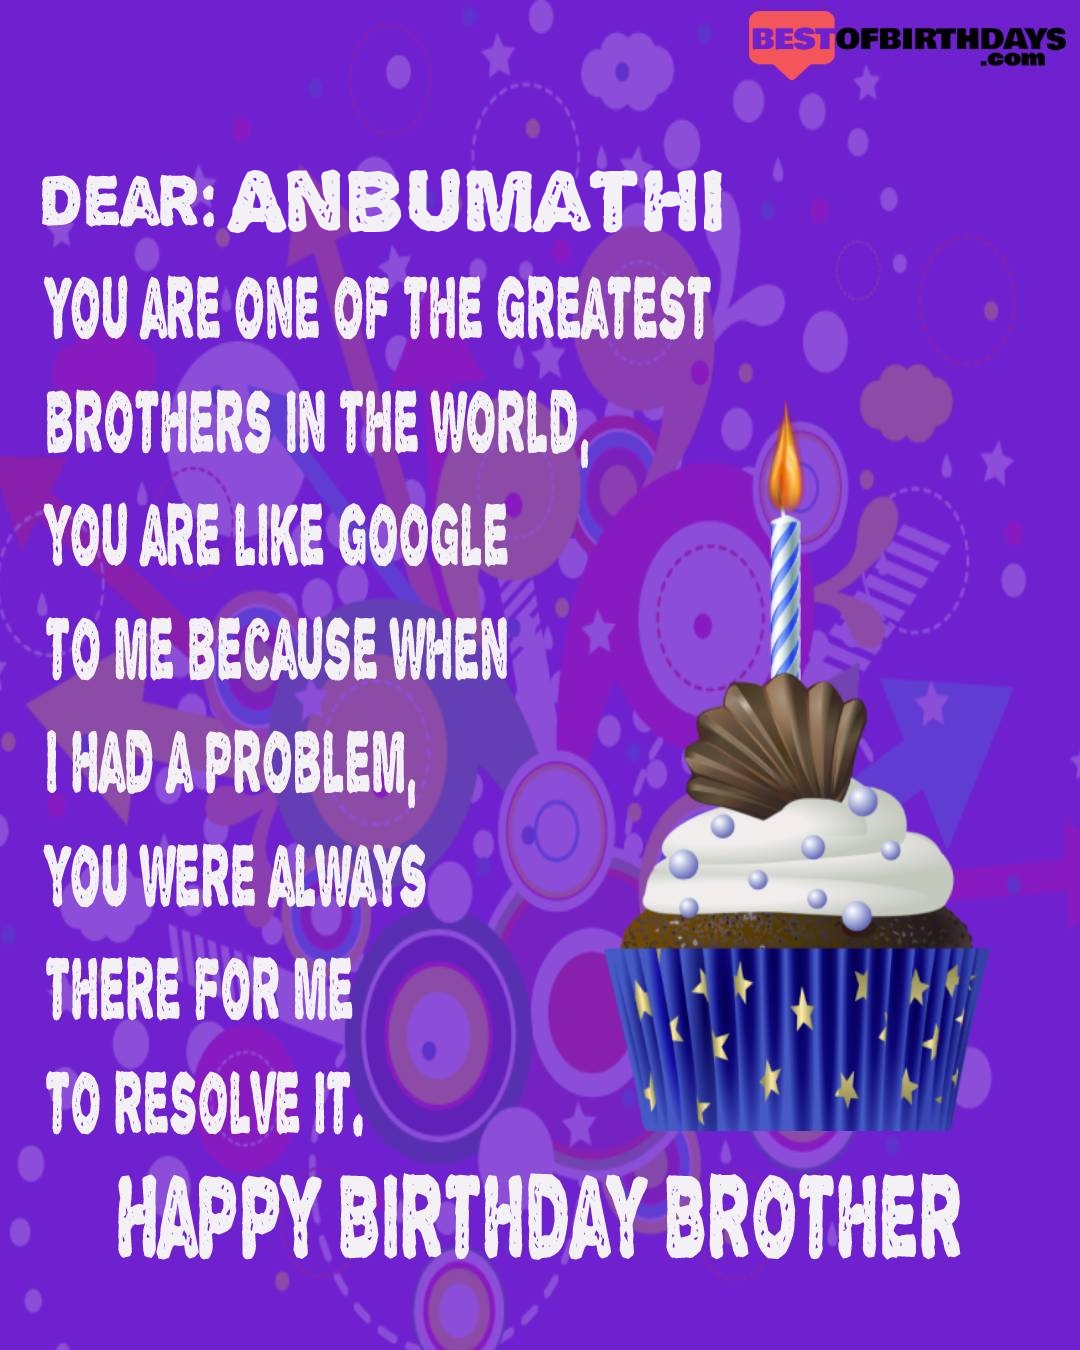 Happy birthday anbumathi bhai brother bro